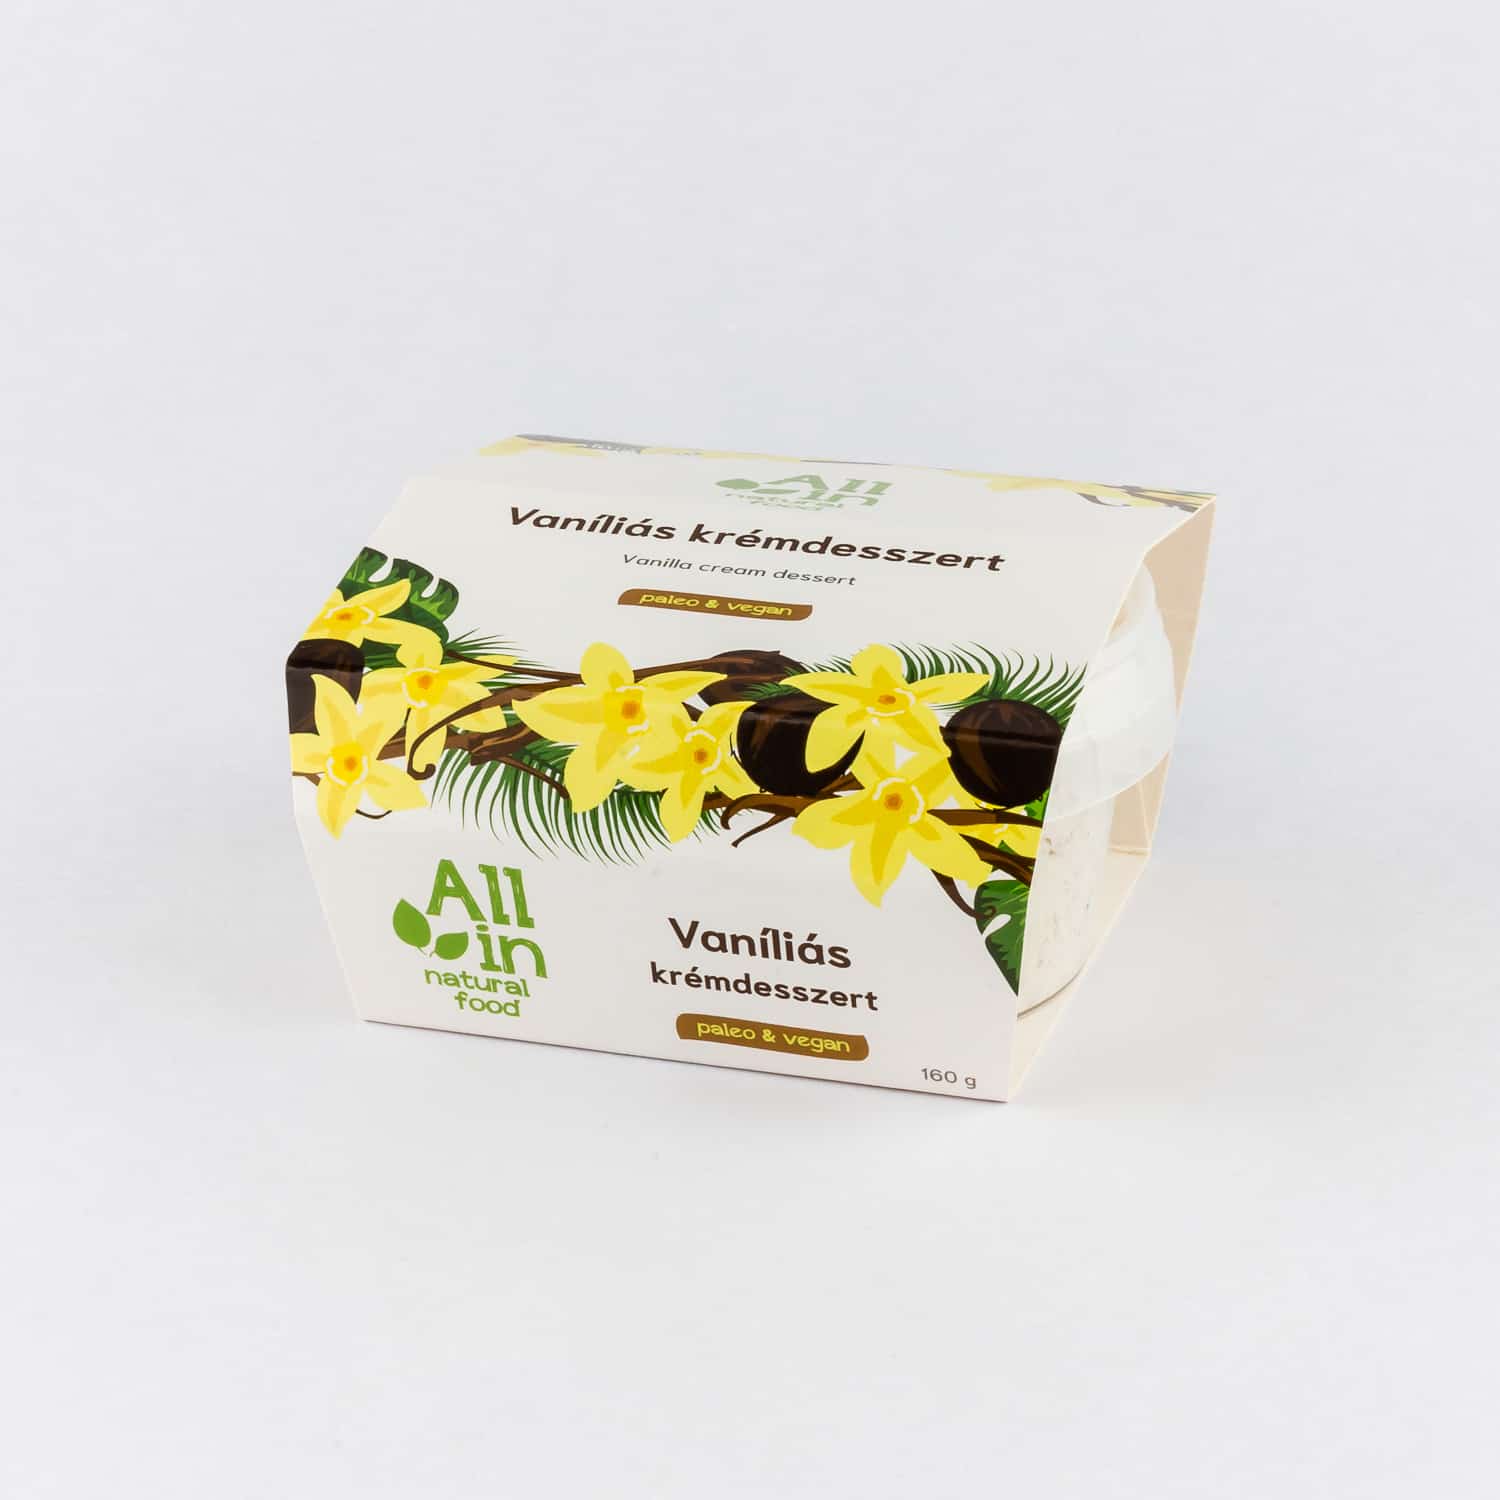 Vanilias-kremdesszert-ALL IN natural food